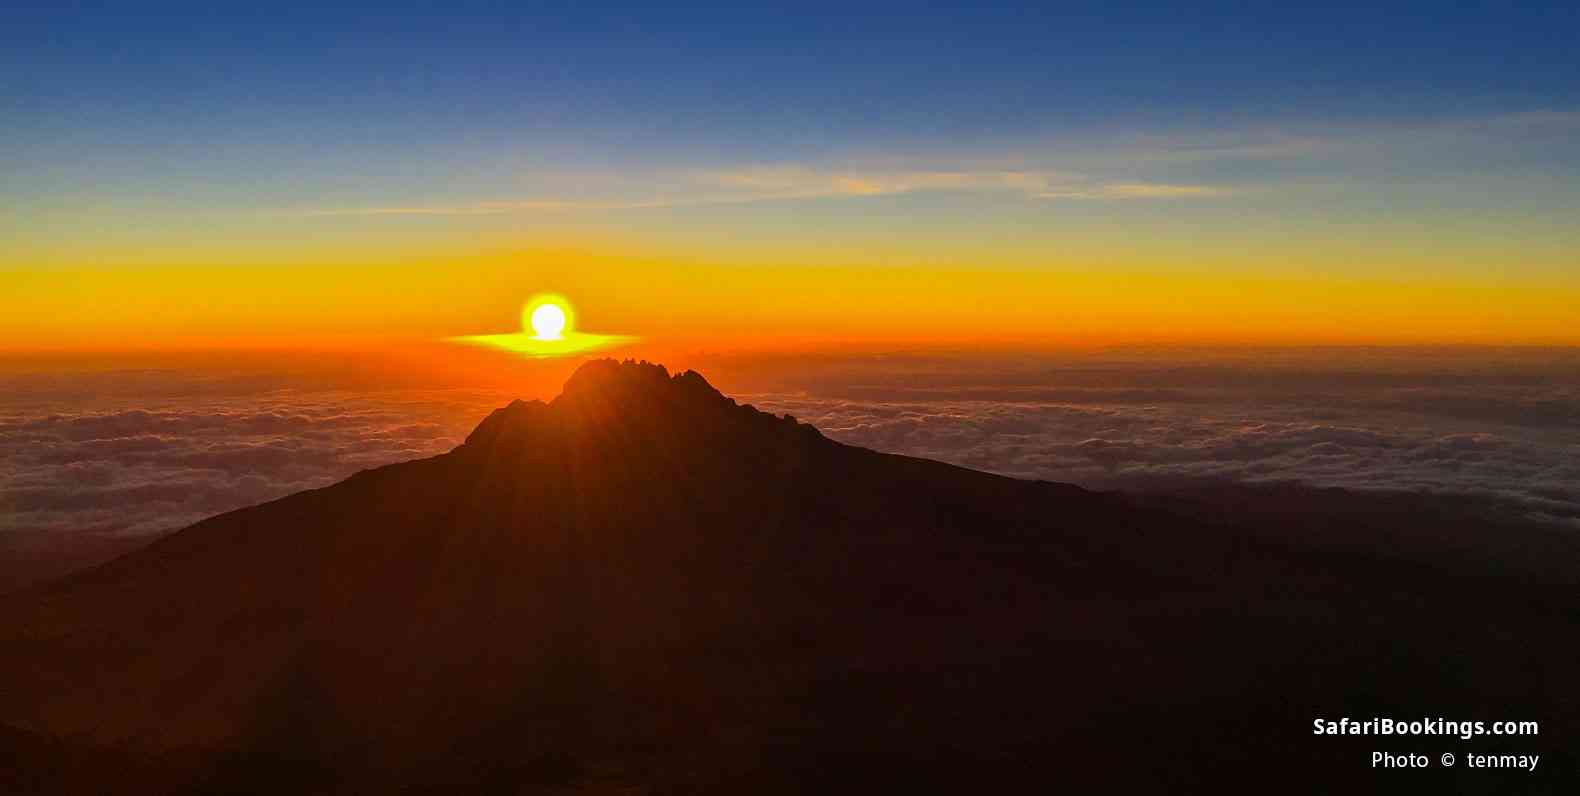 Sunrise over Mawenzi Peak